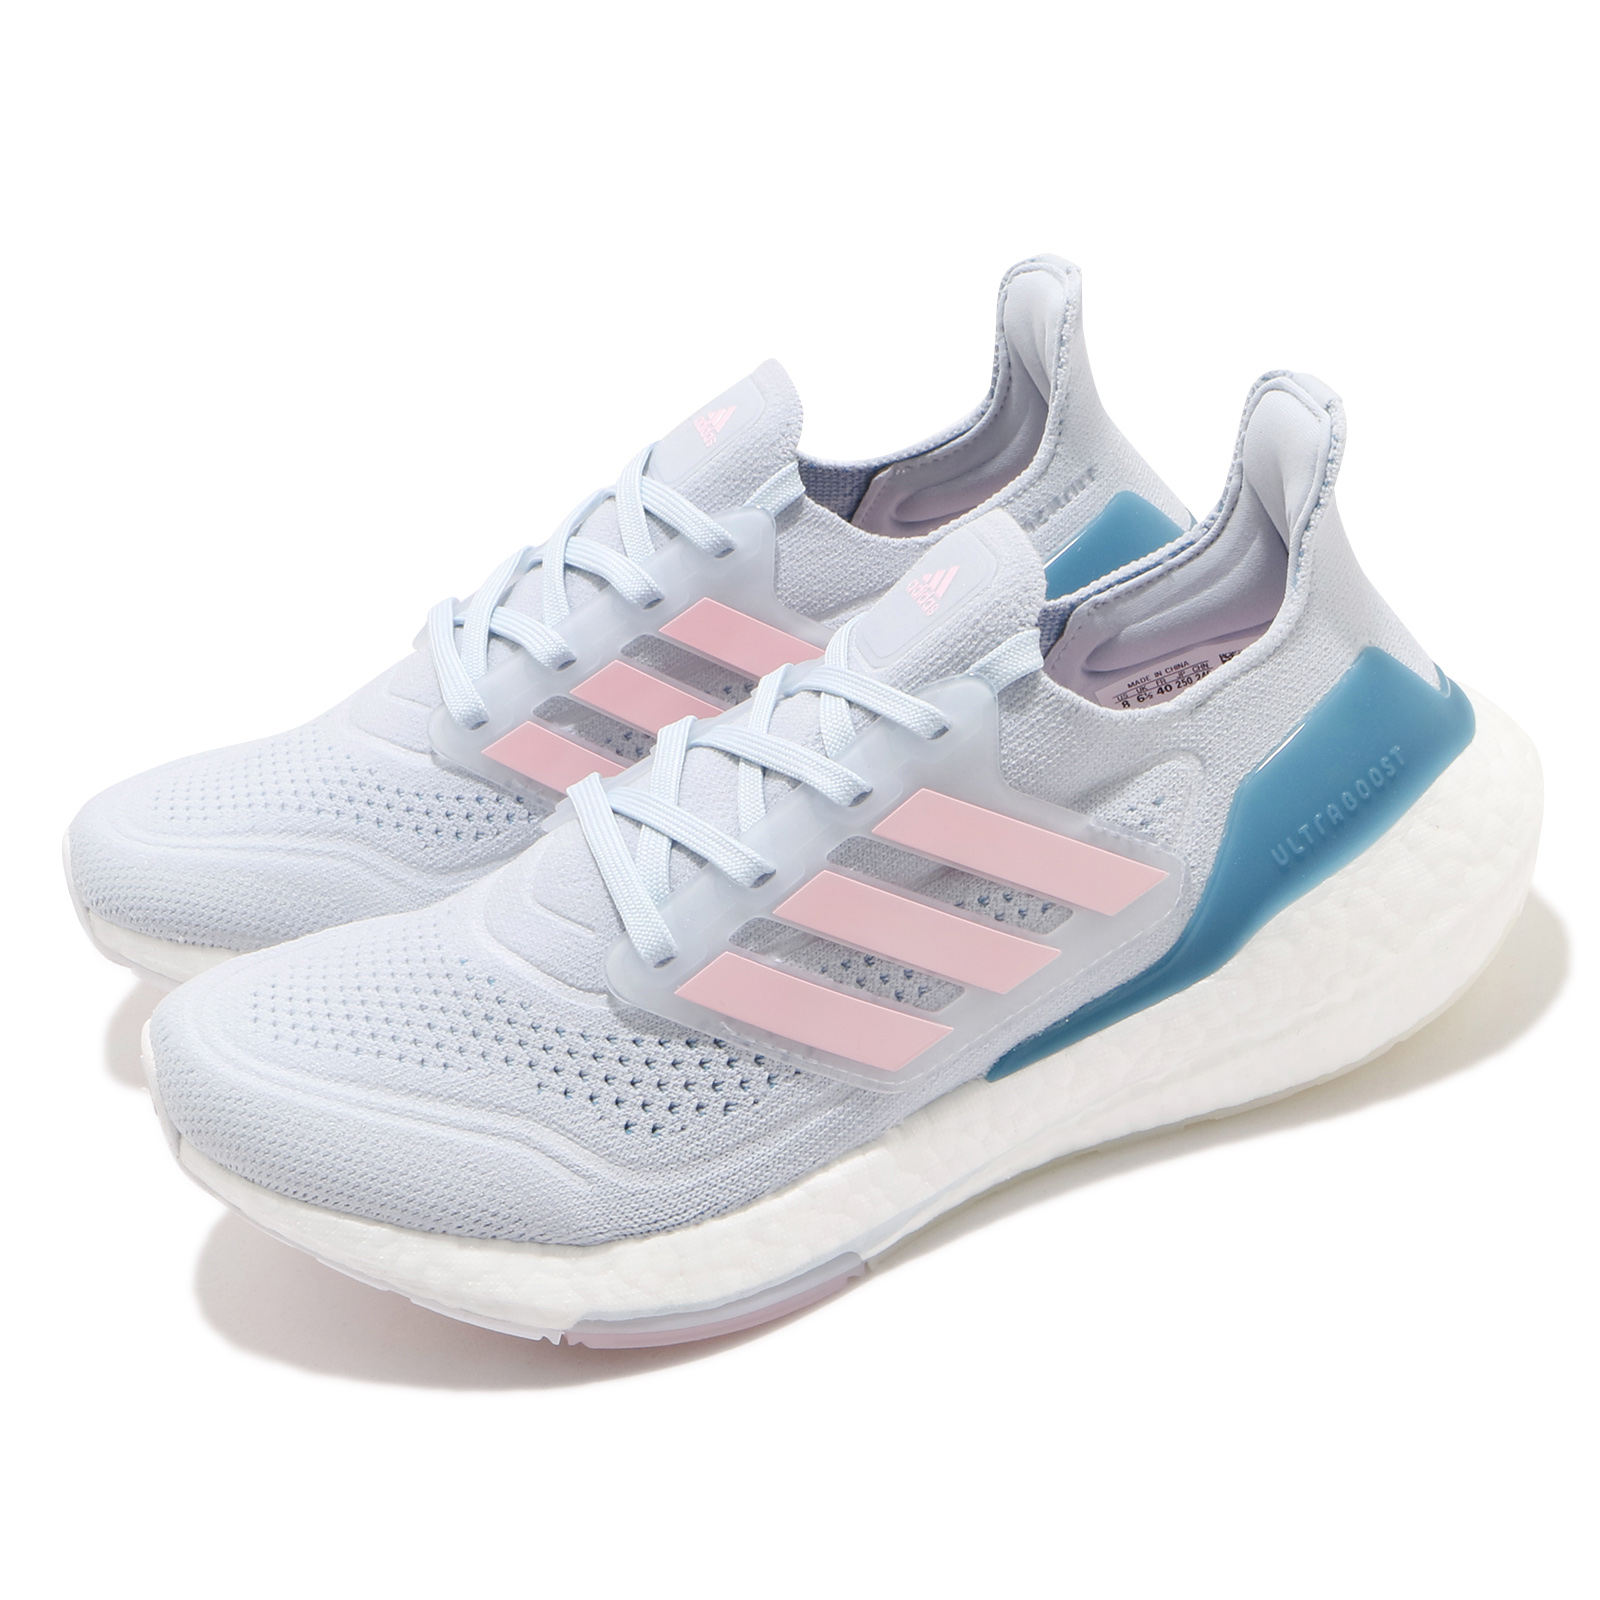 Adidas 慢跑鞋 Ultraboost 21 W 粉紫藍 粉紅 愛迪達 BOOST FY0395